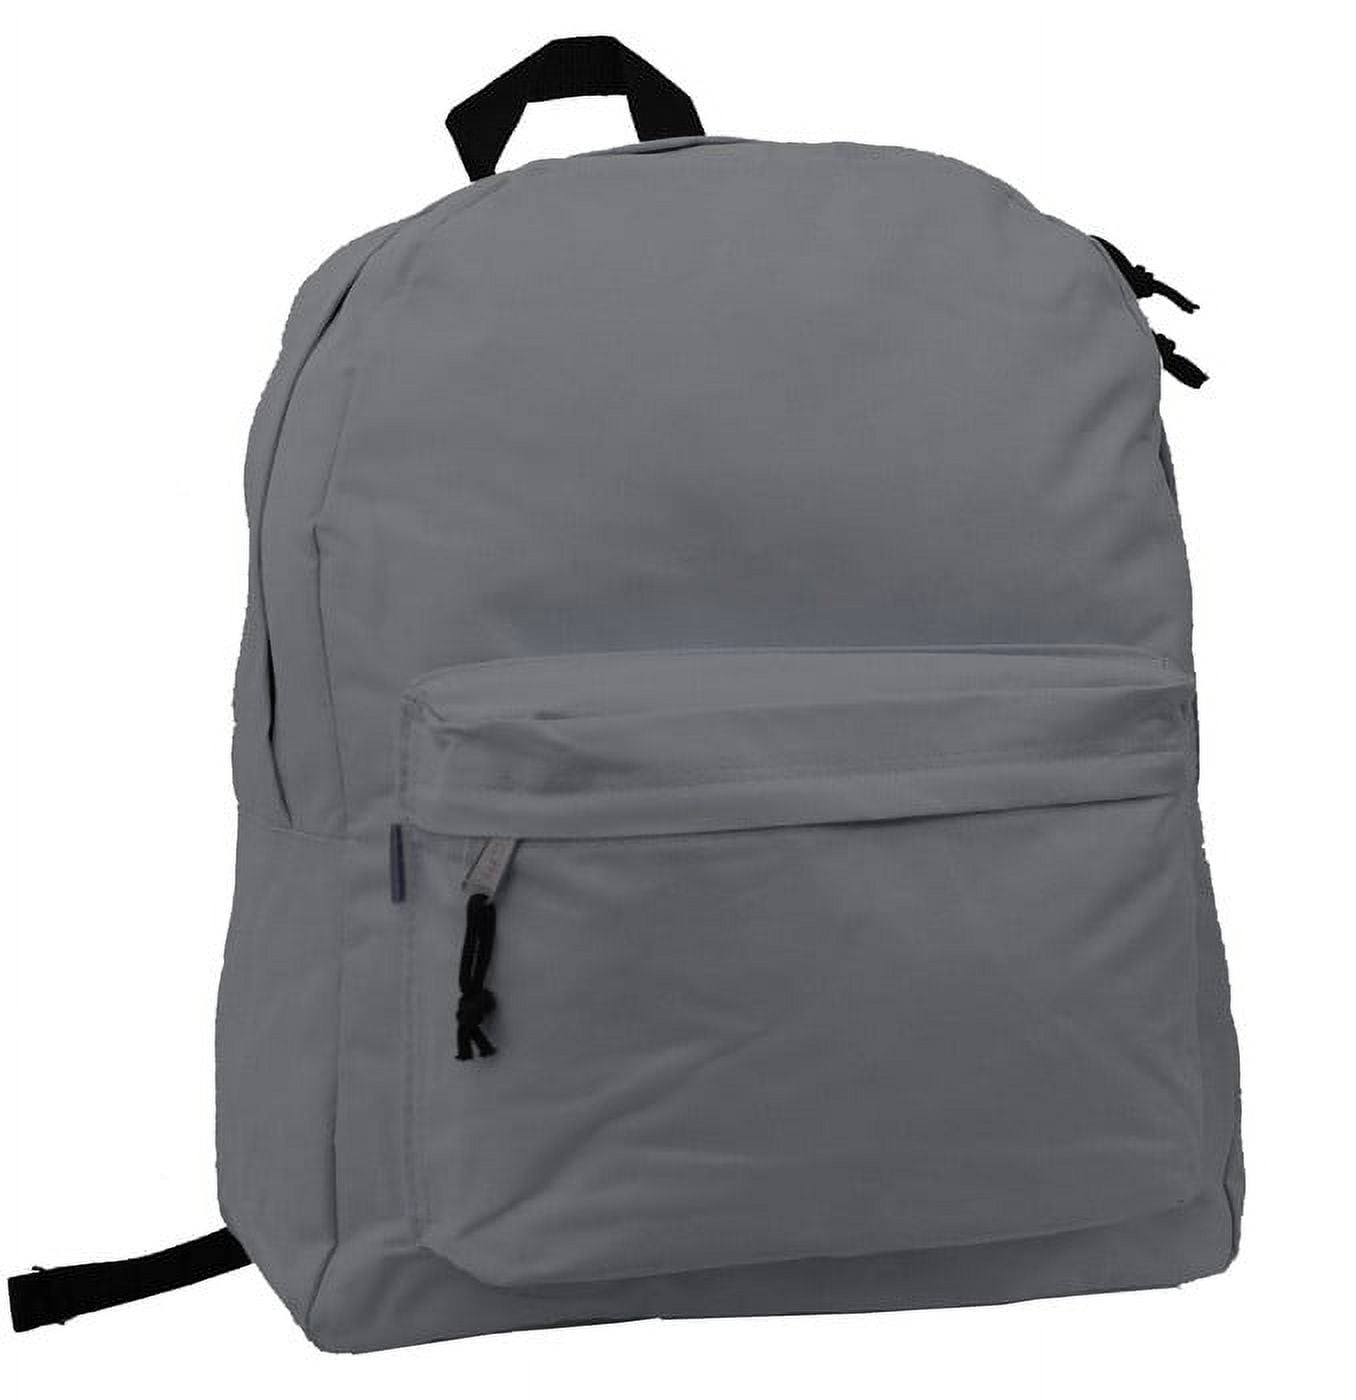 Reebok Unisex Adult Roman 19.5 Laptop Bungee Backpack, Light